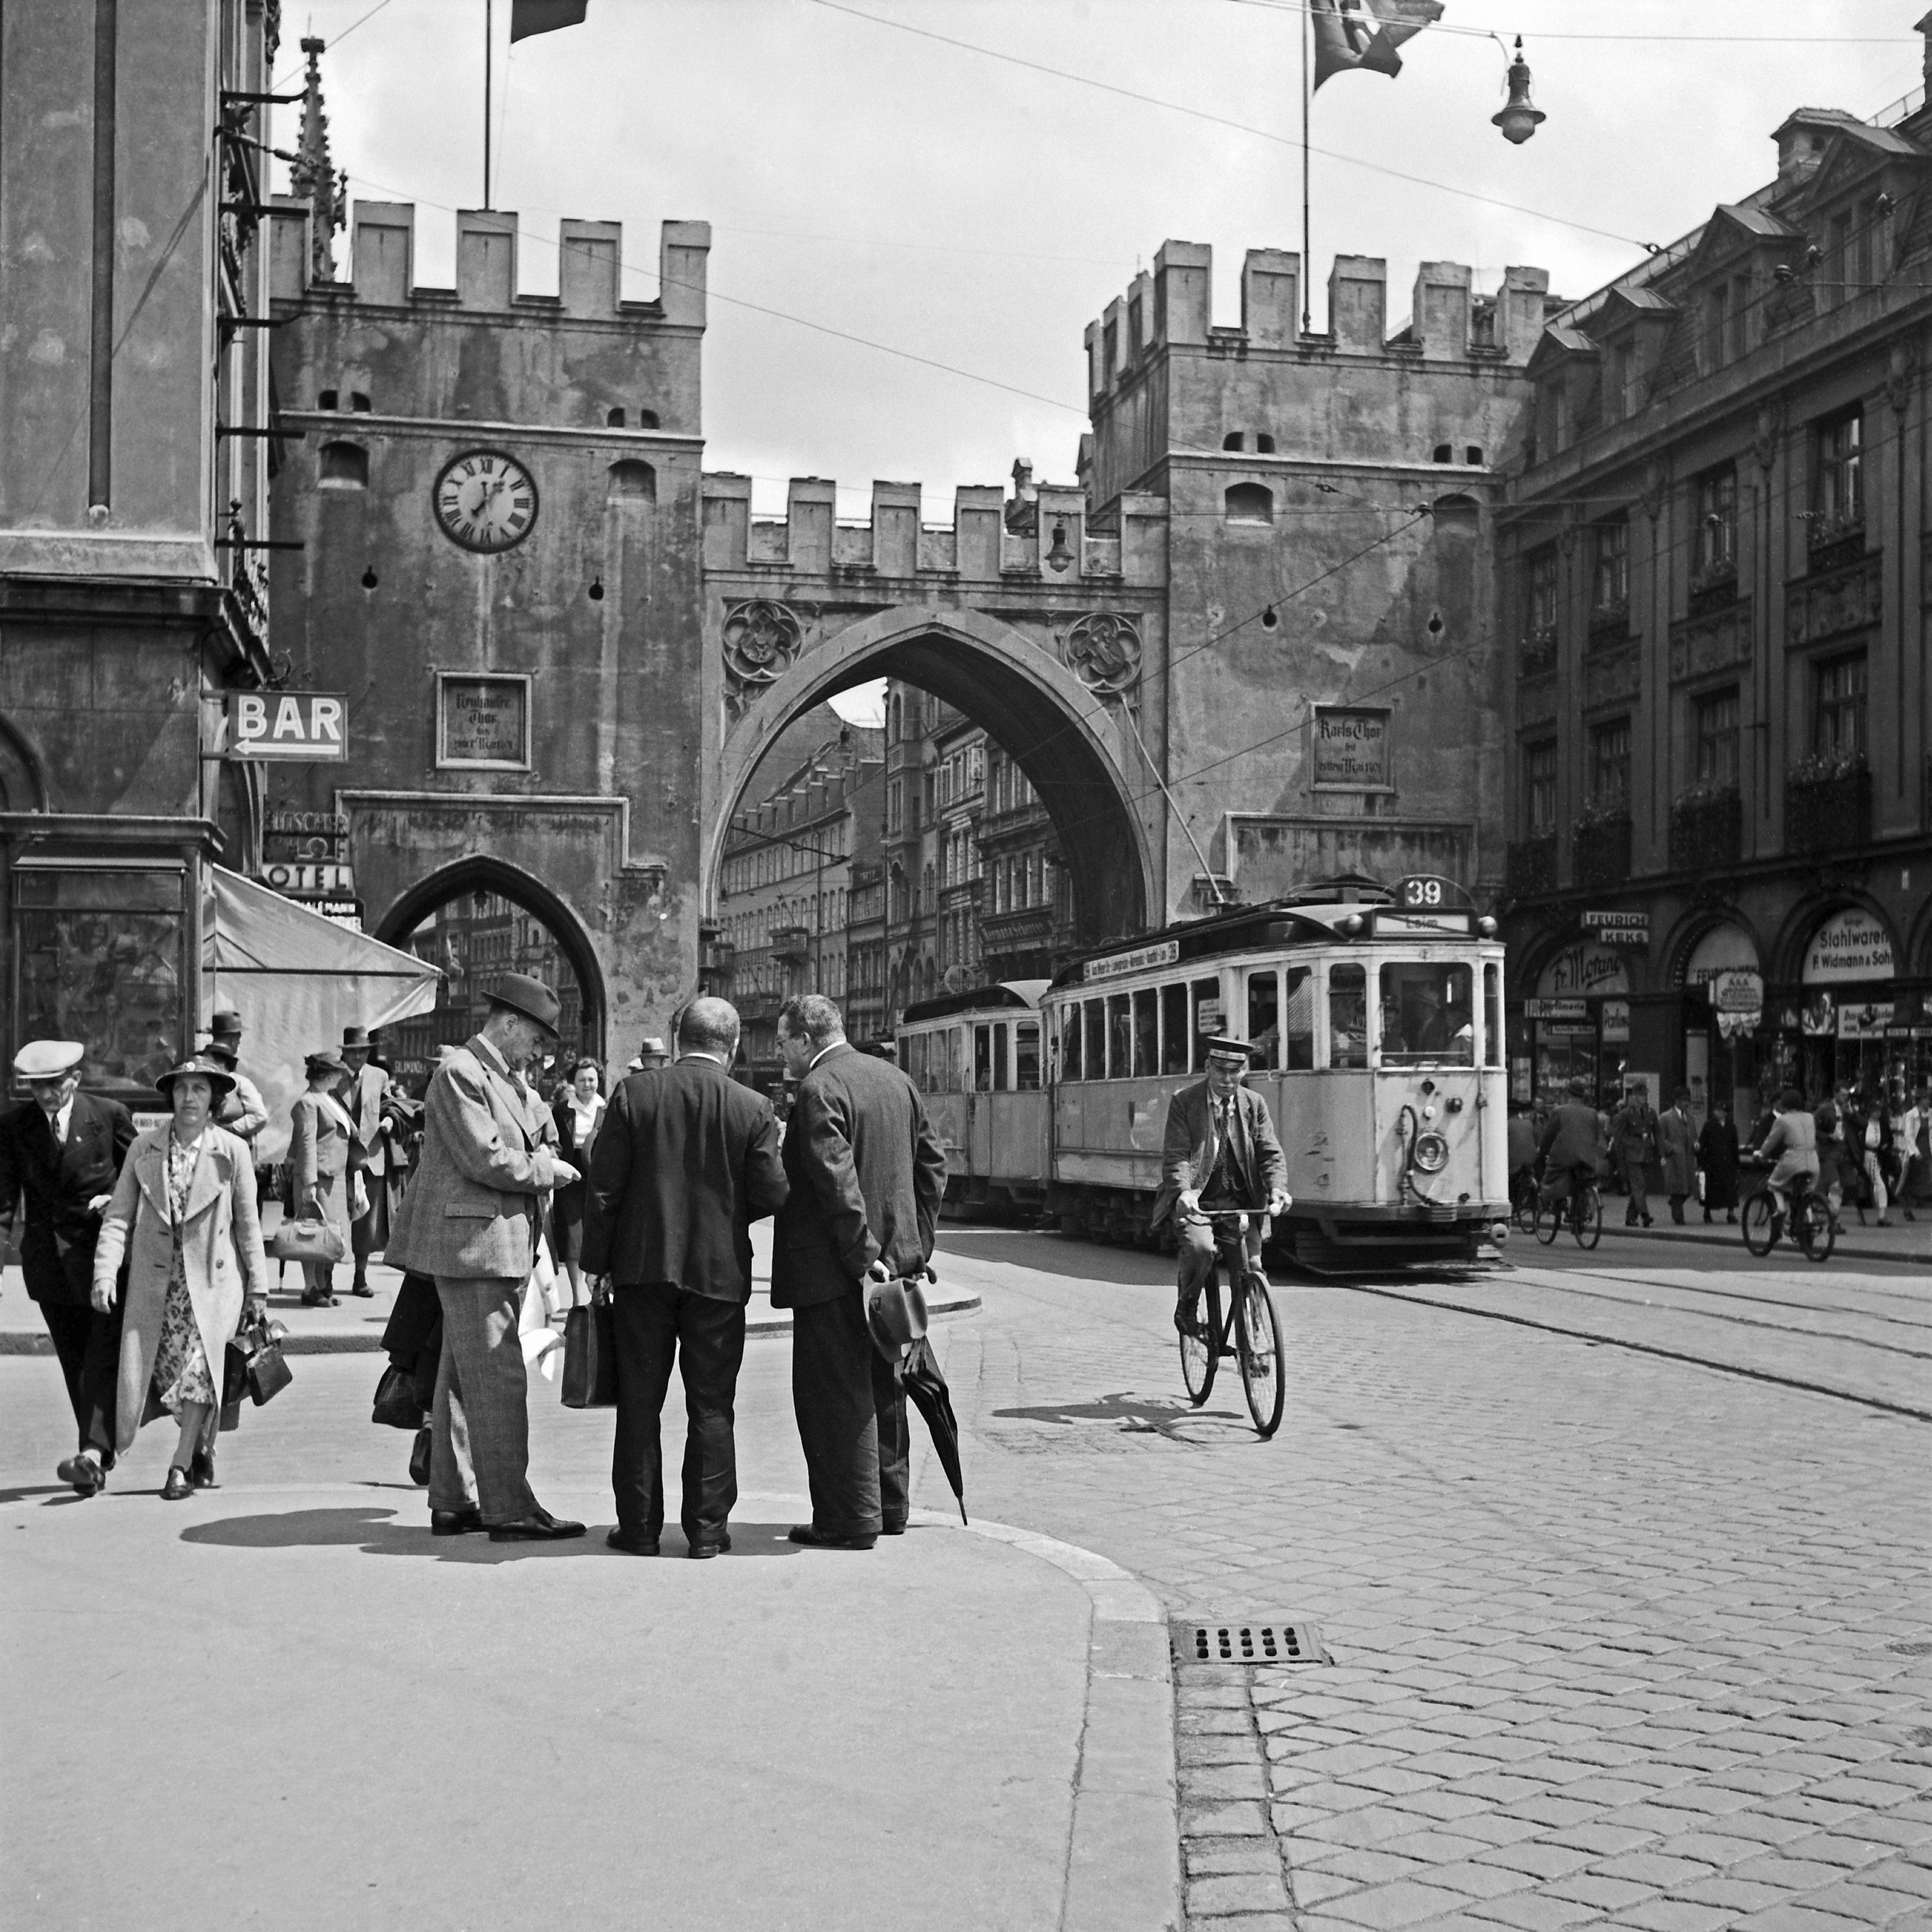 Karl Heinrich Lämmel Black and White Photograph - Tram at Karlstor gate inner city Munich, Germany 1937, Printed Later